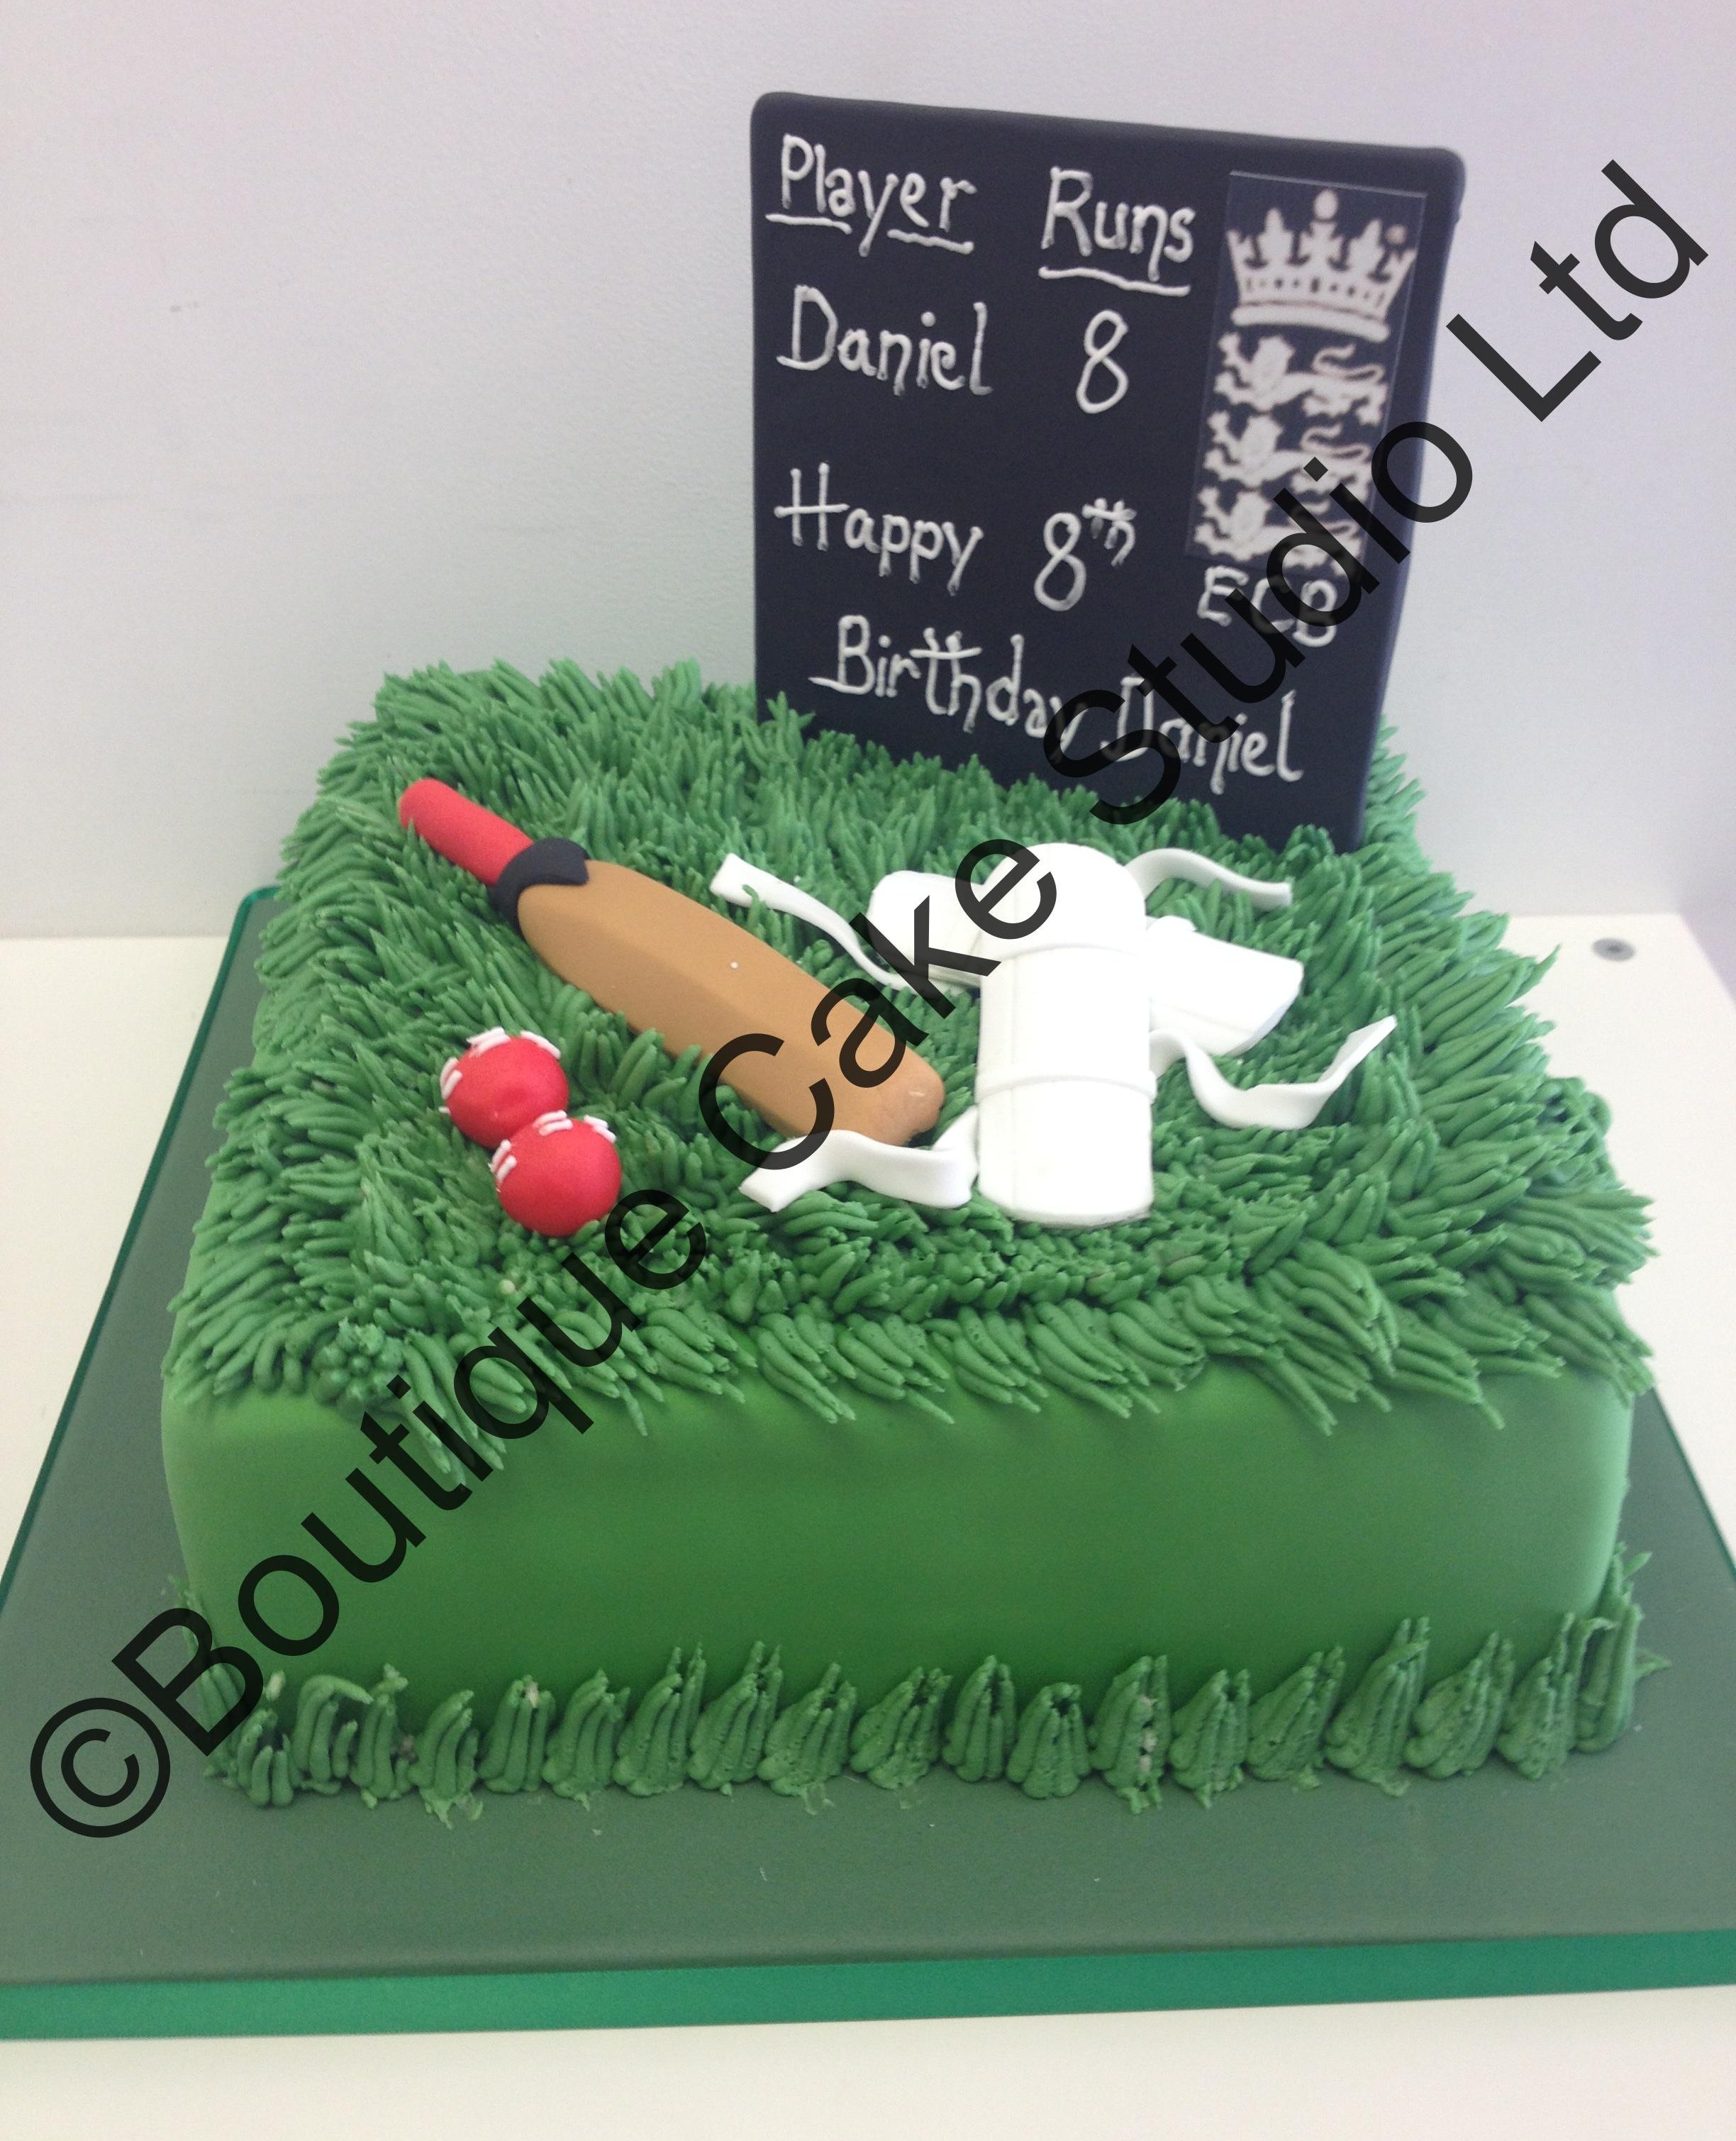 Cricket themed cake